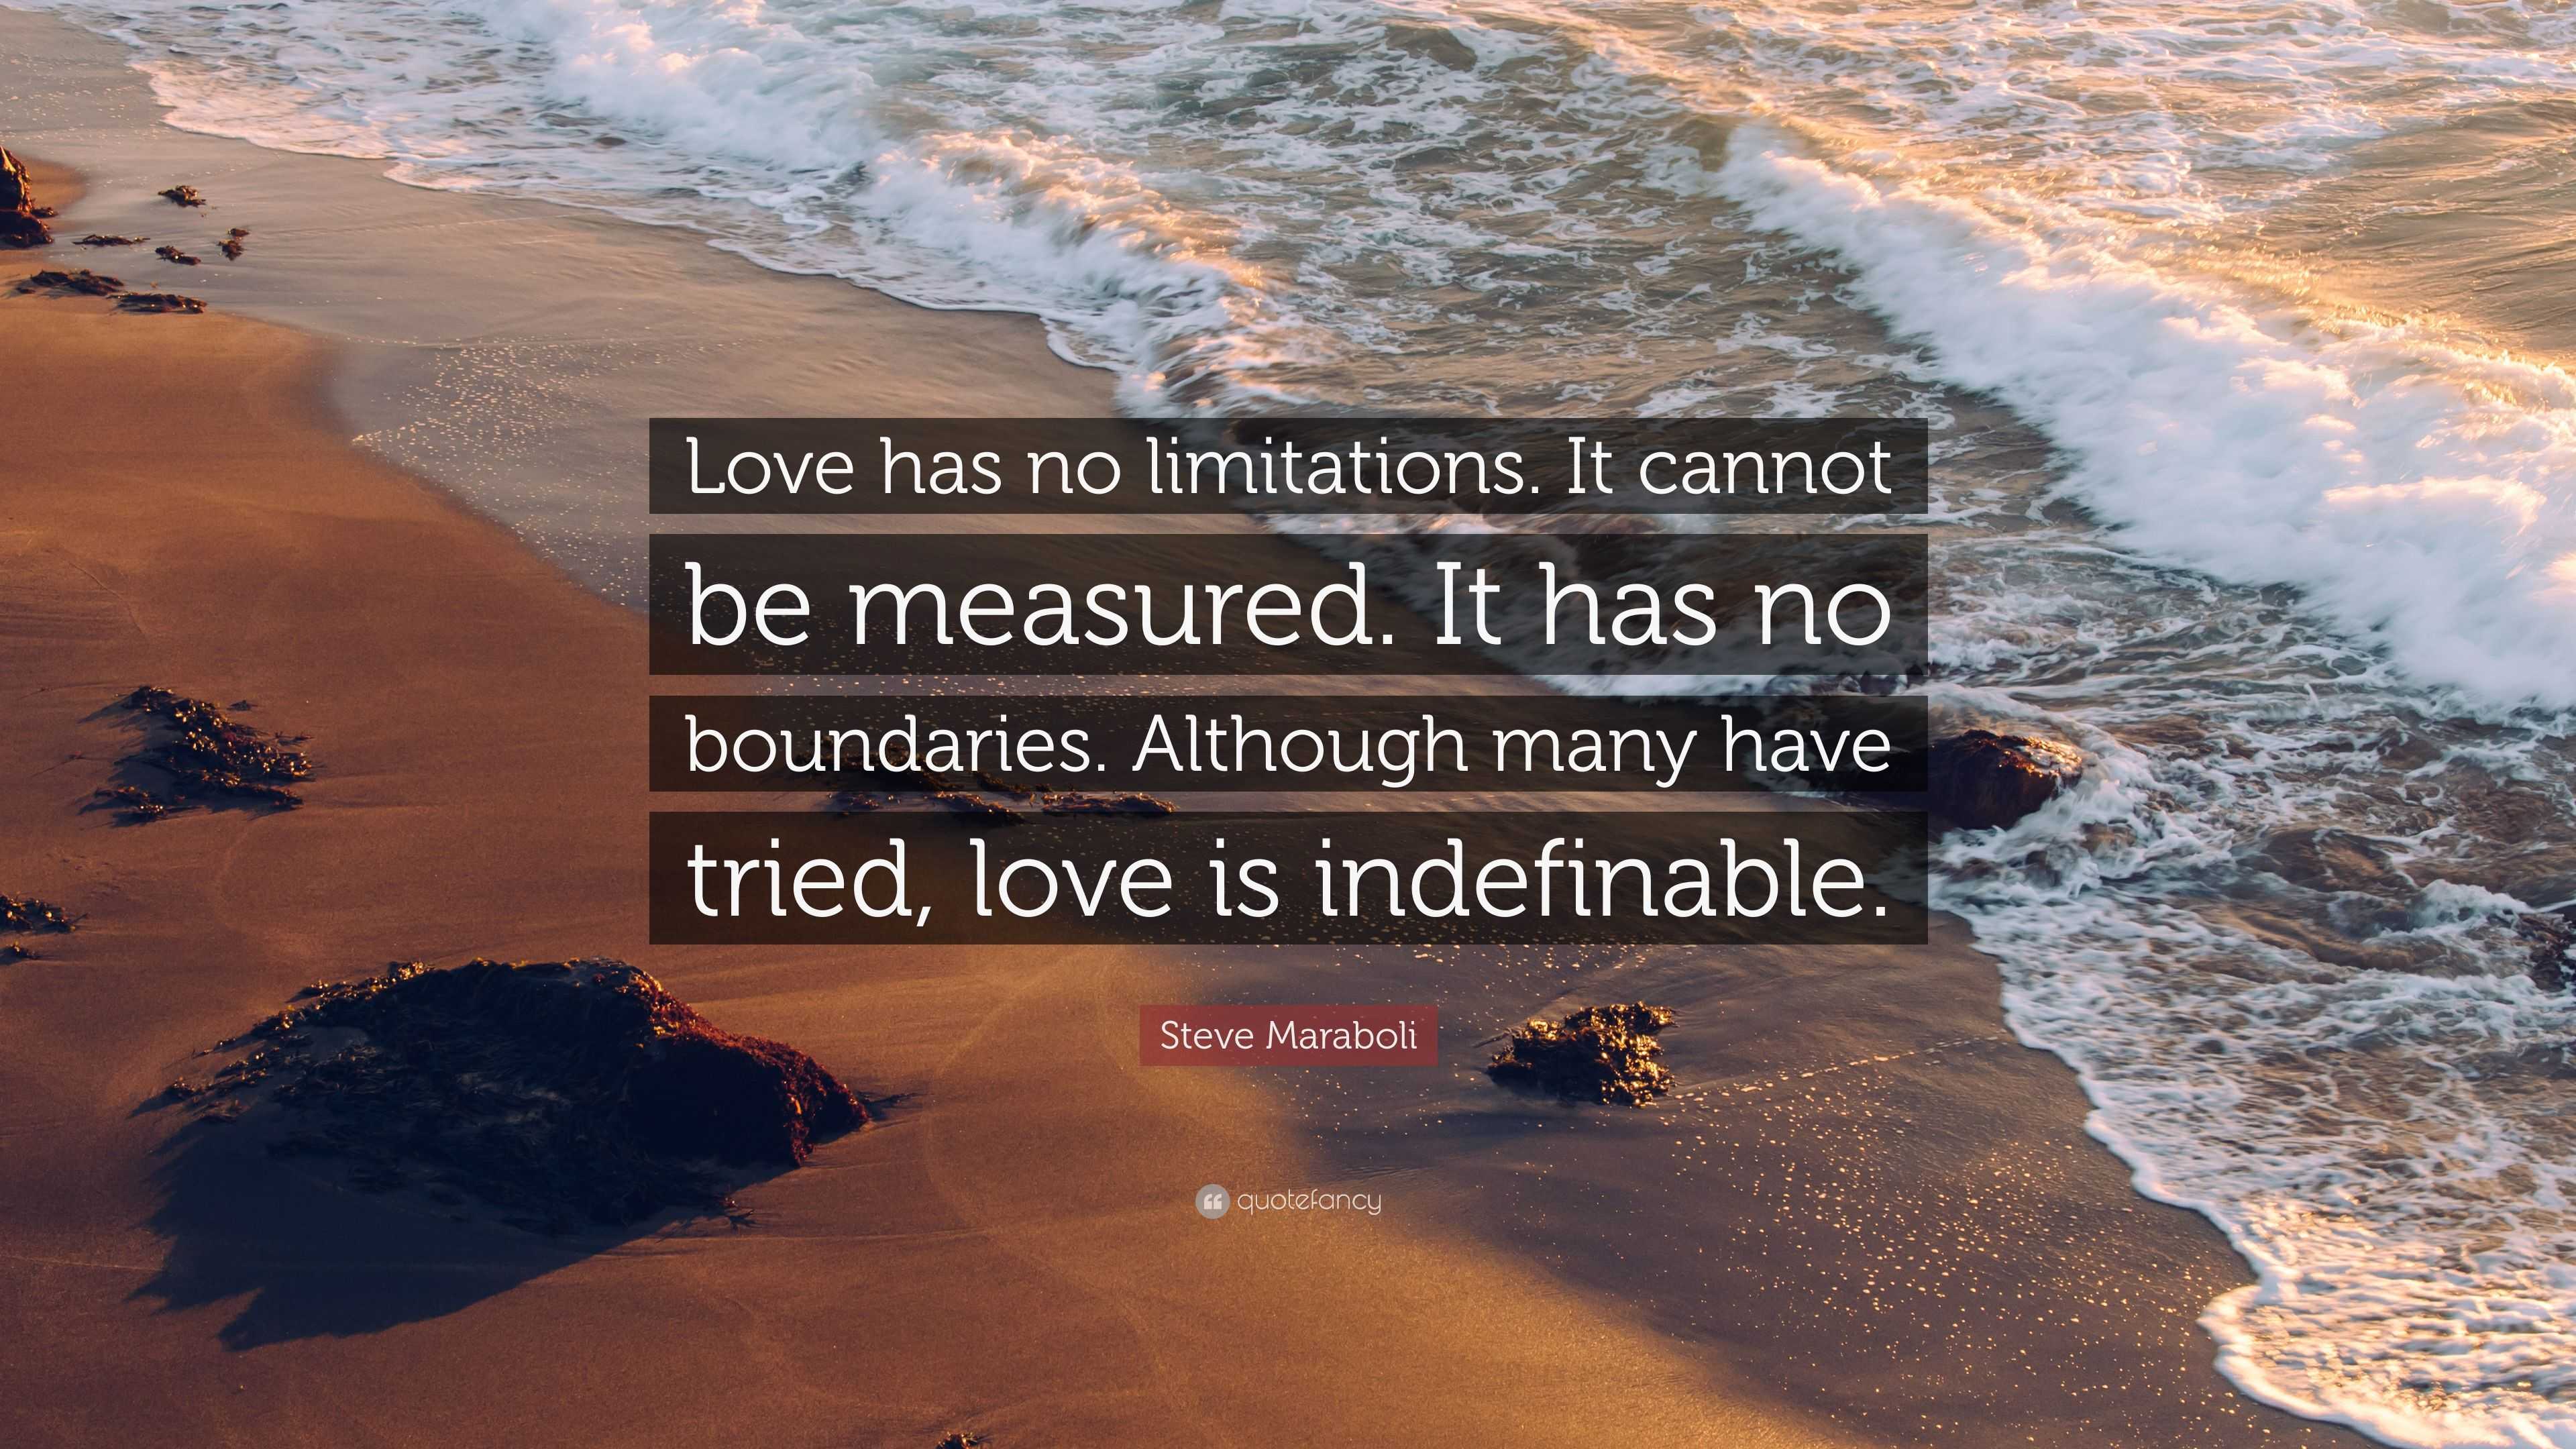 Steve Maraboli Quote: "Love has no limitations. It cannot be measured. It has no boundaries ...